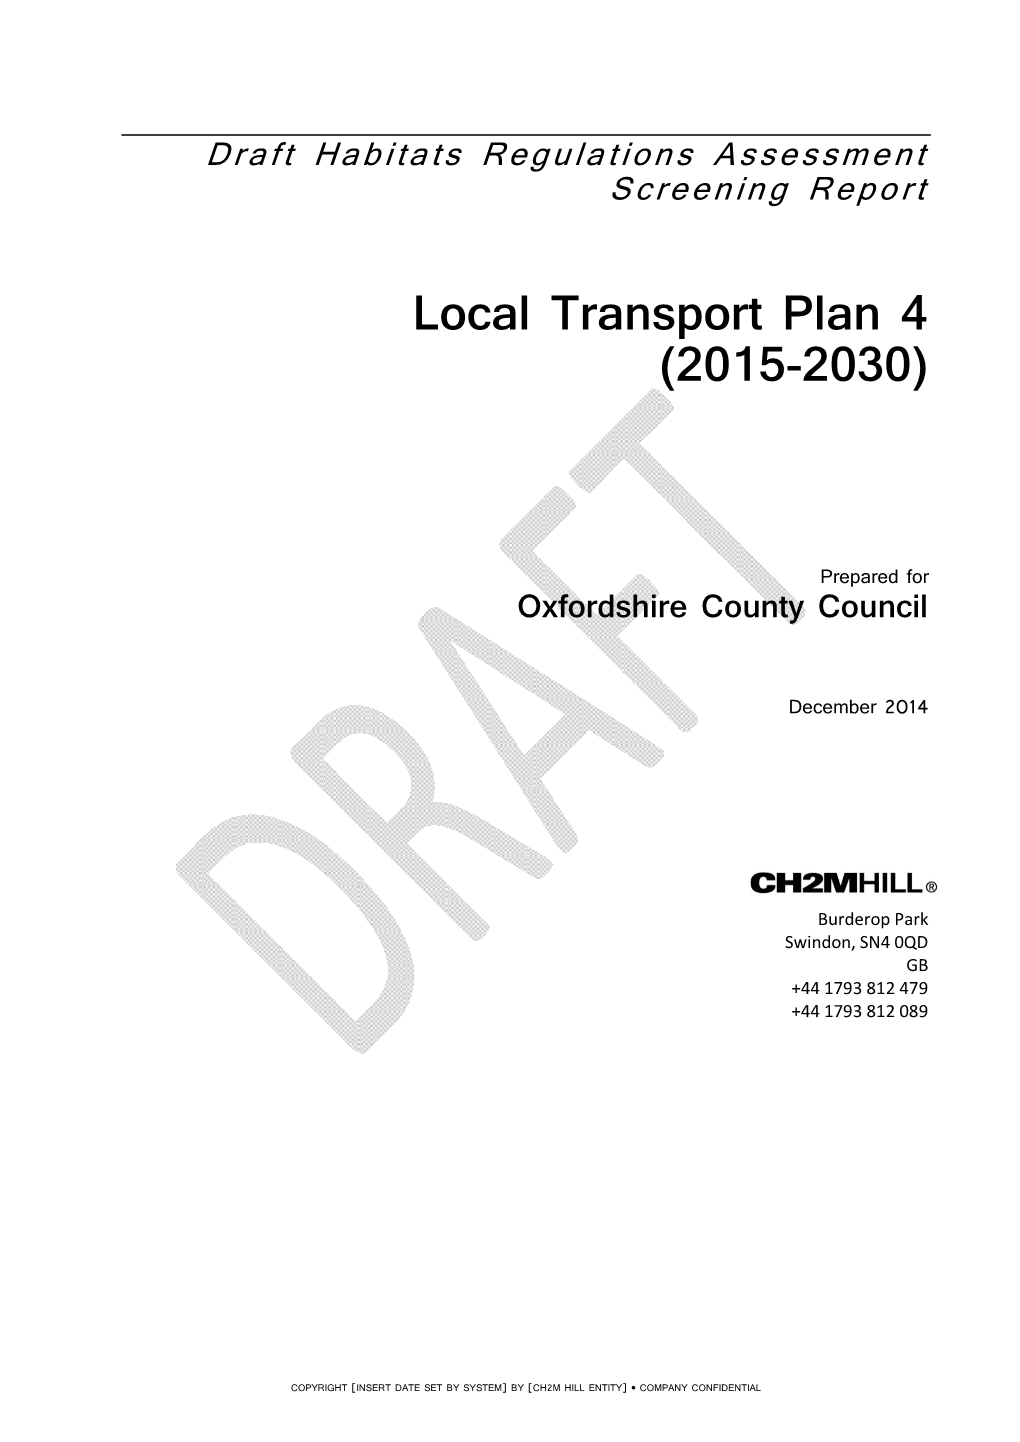 Local Transport Plan (LTP4)